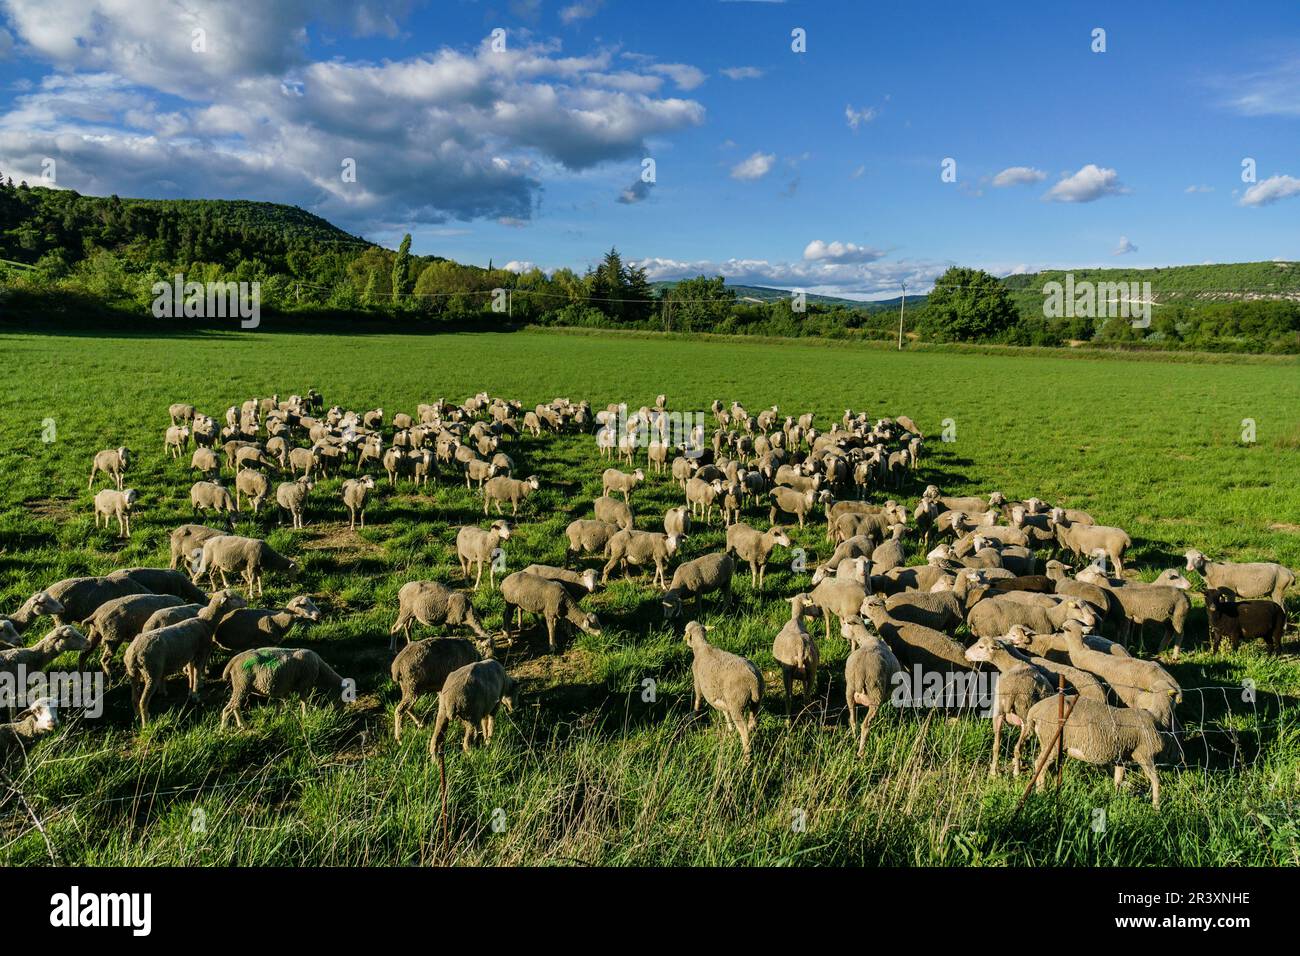 rebaño de ovejas,parque natural regional de Luberon,Provenza,Francia, Europa. Stock Photo